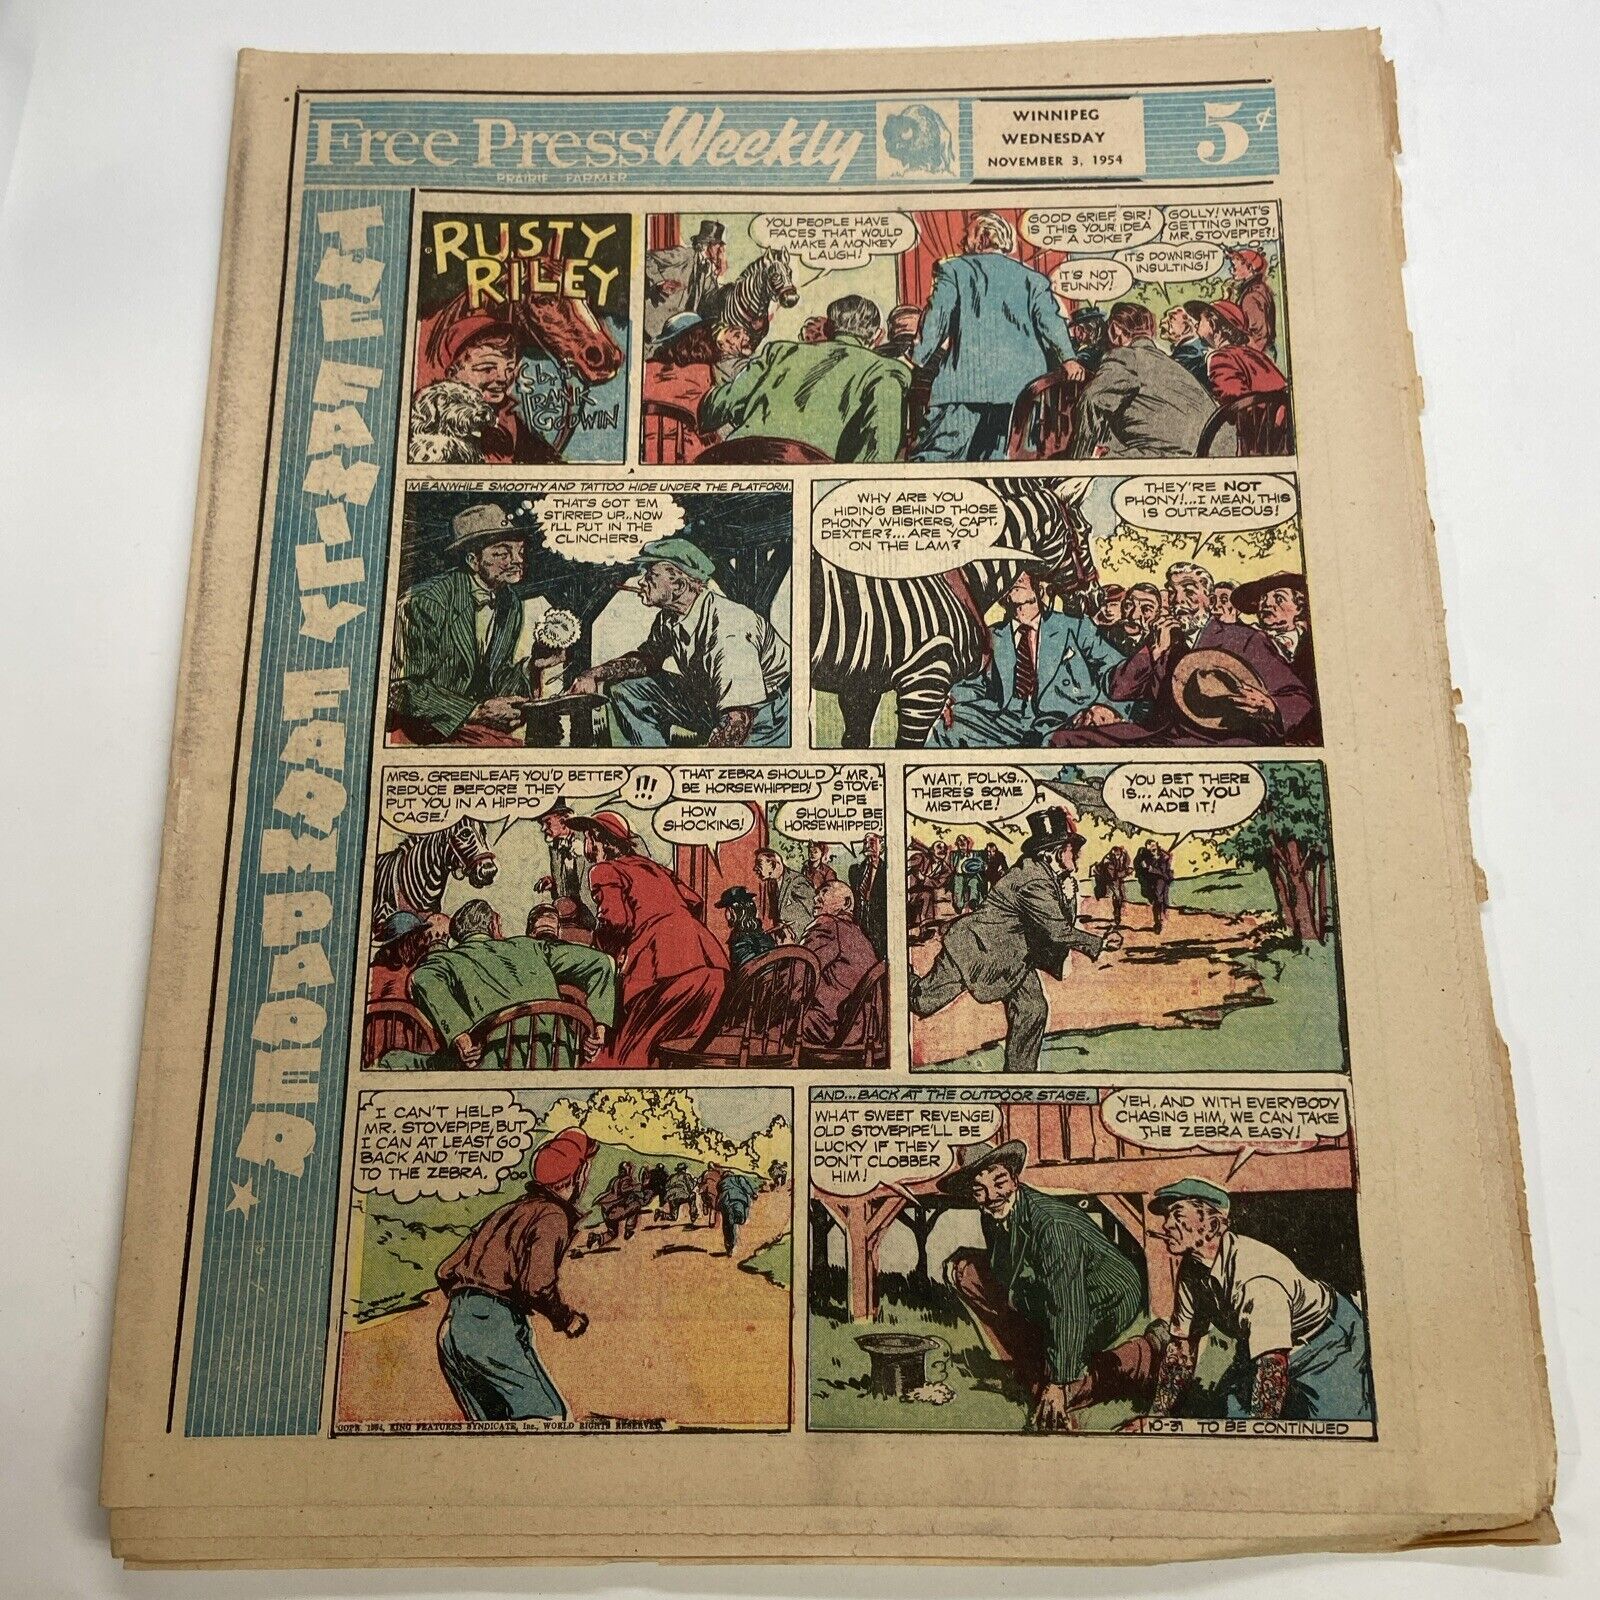 Free press weekly Winnipeg Prairie Farmer comic section November 3, 1954